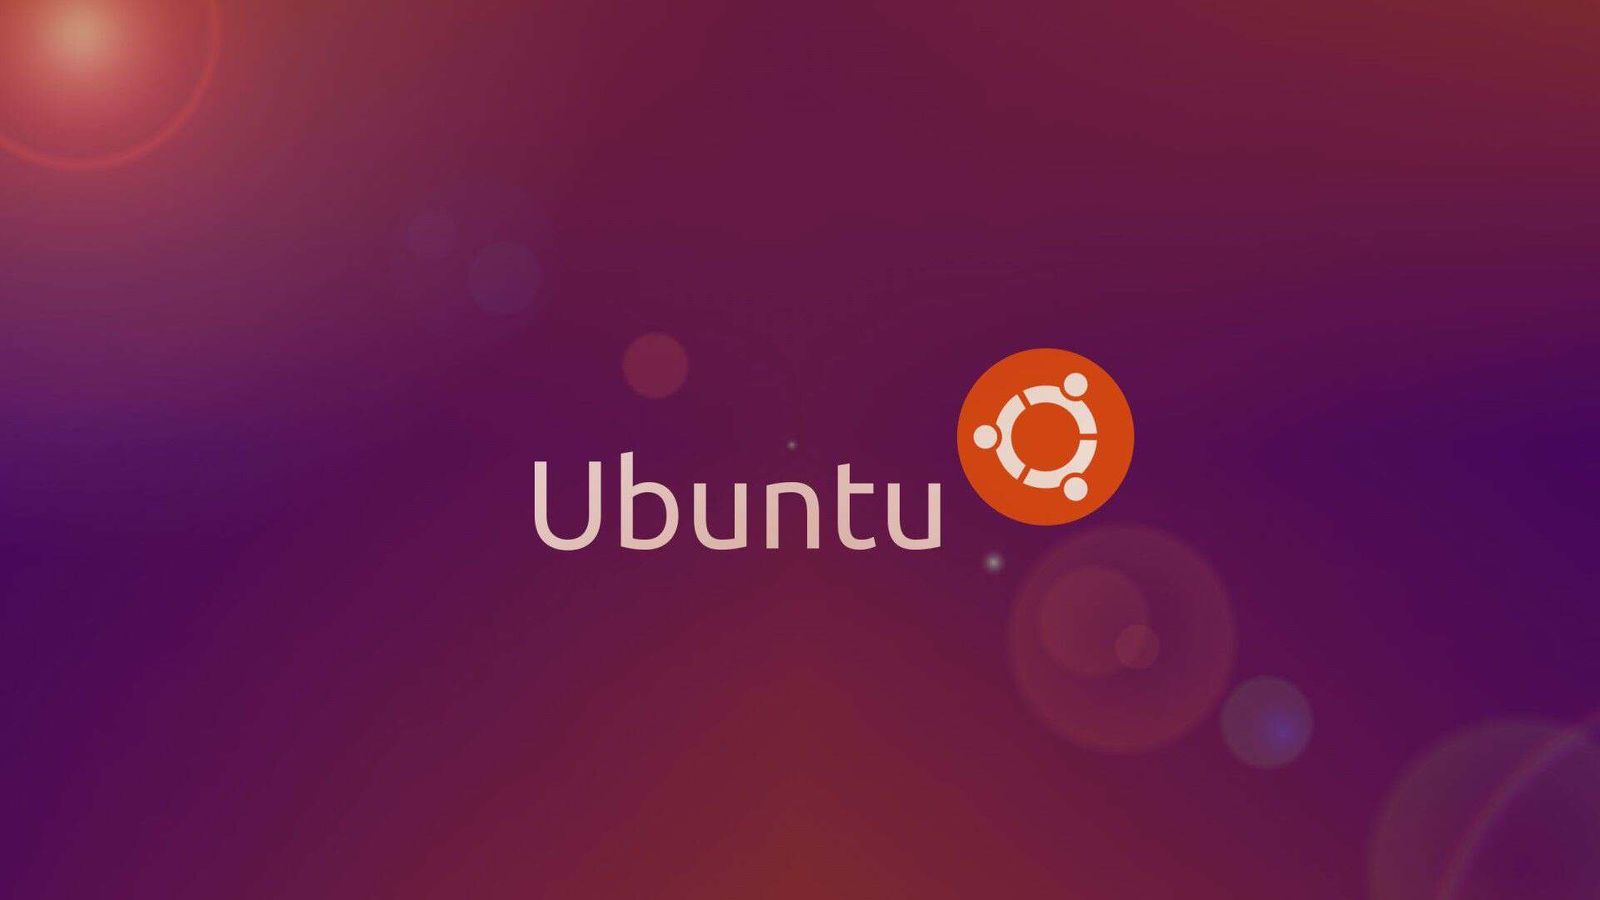 How to Install Unity Desktop Environment on Ubuntu 